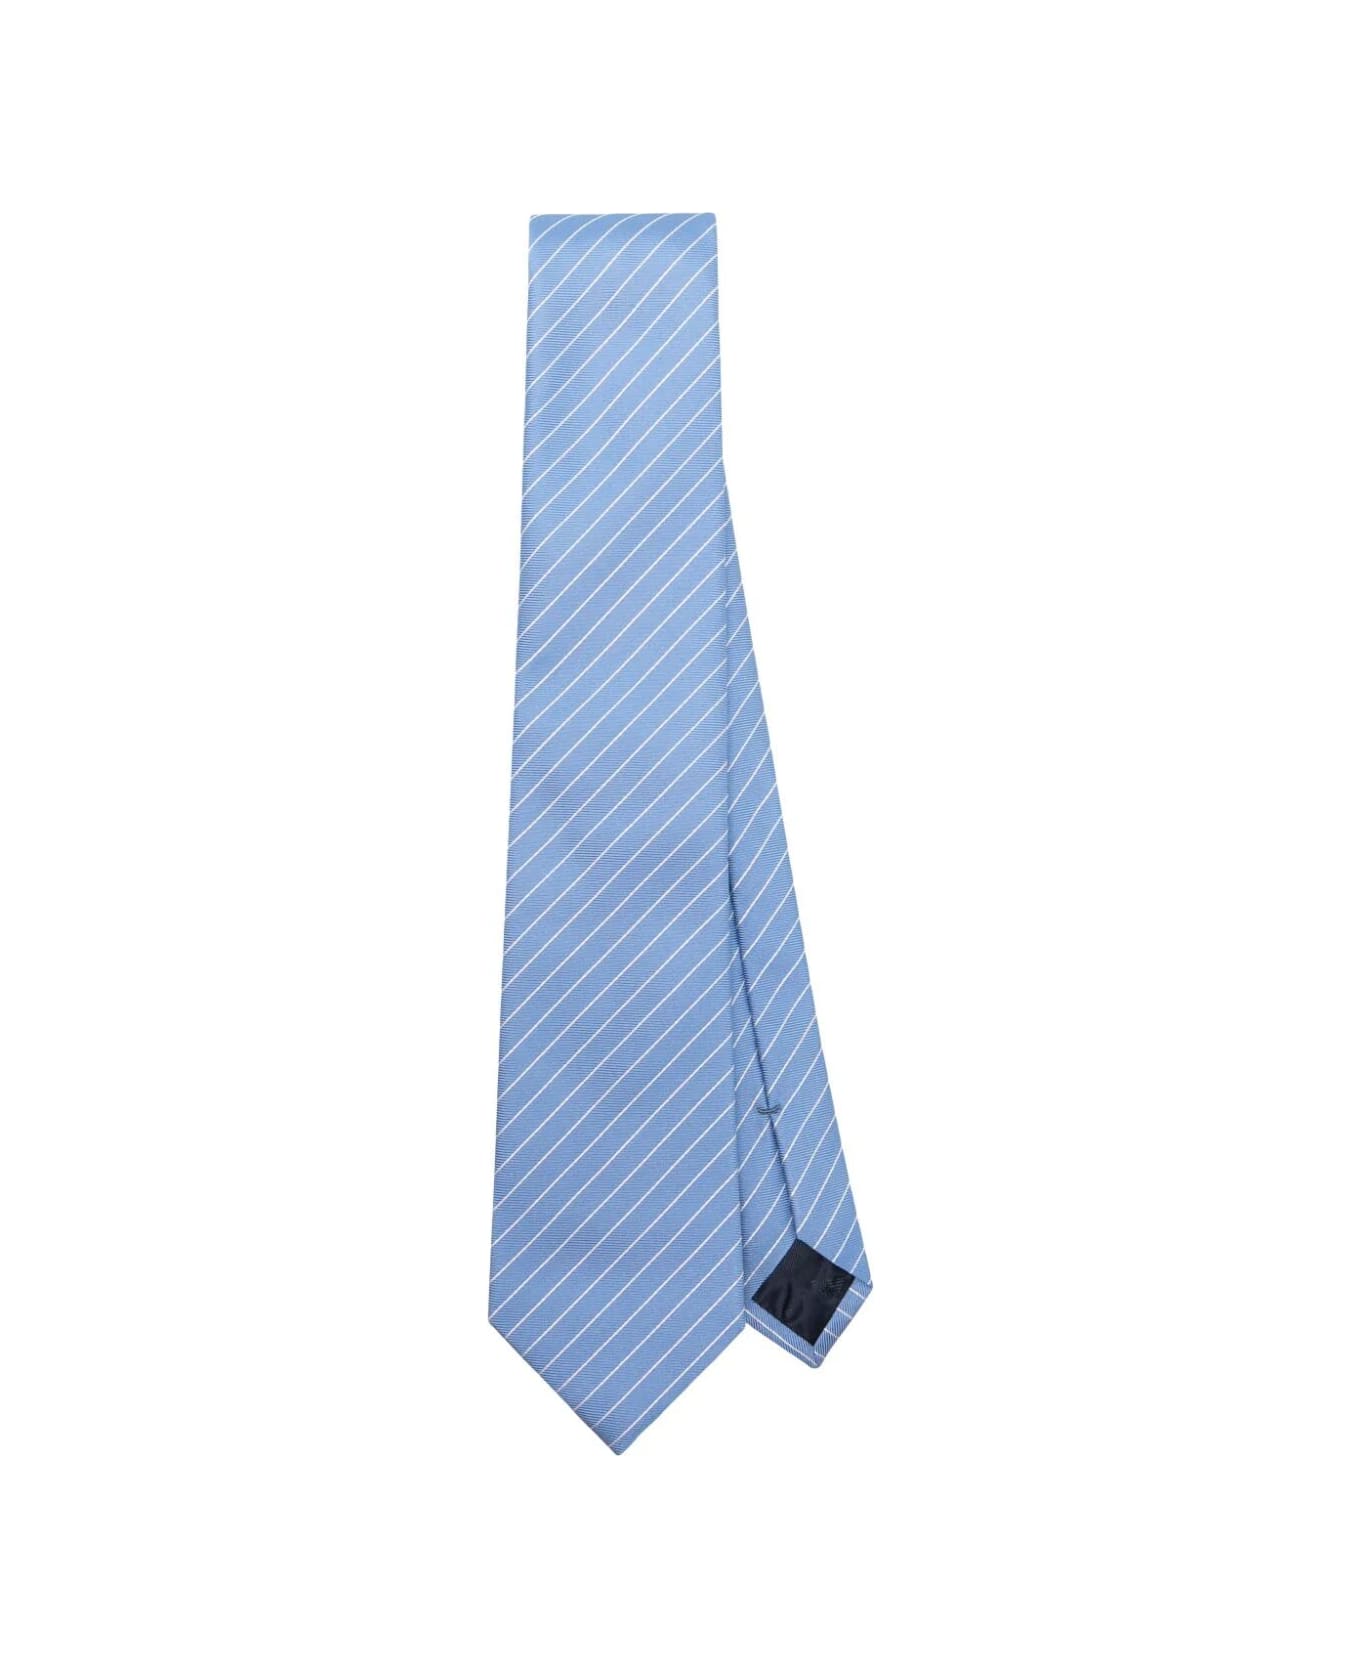 Emporio Armani Woven Jacquard Tie - Light Blue